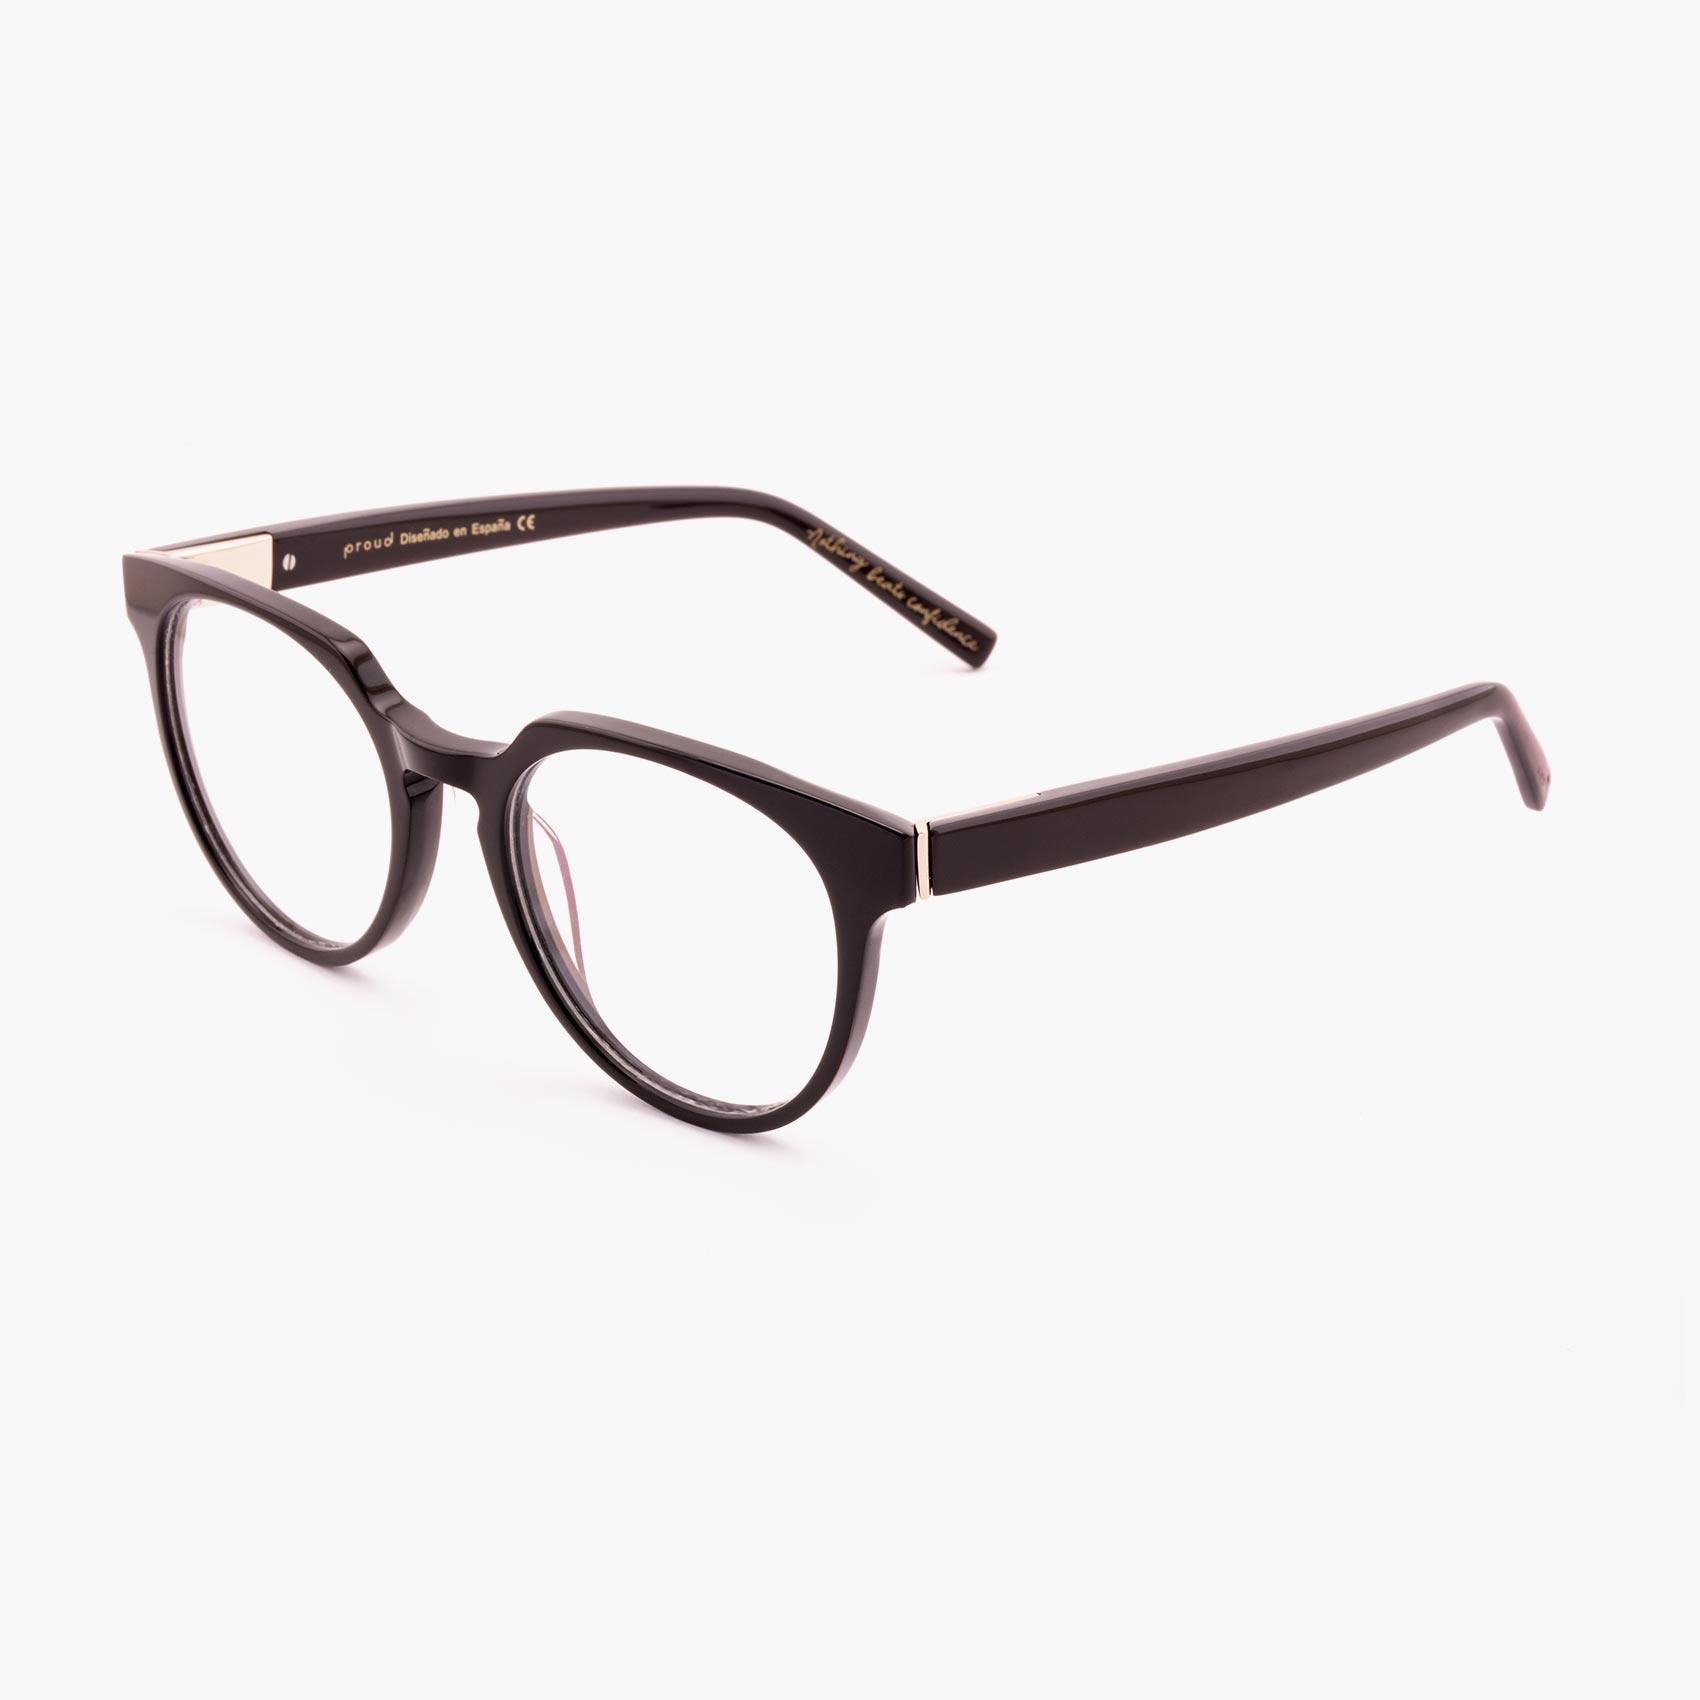 Proud eyewear Benigni C2 P trend dark brown prescription glasses